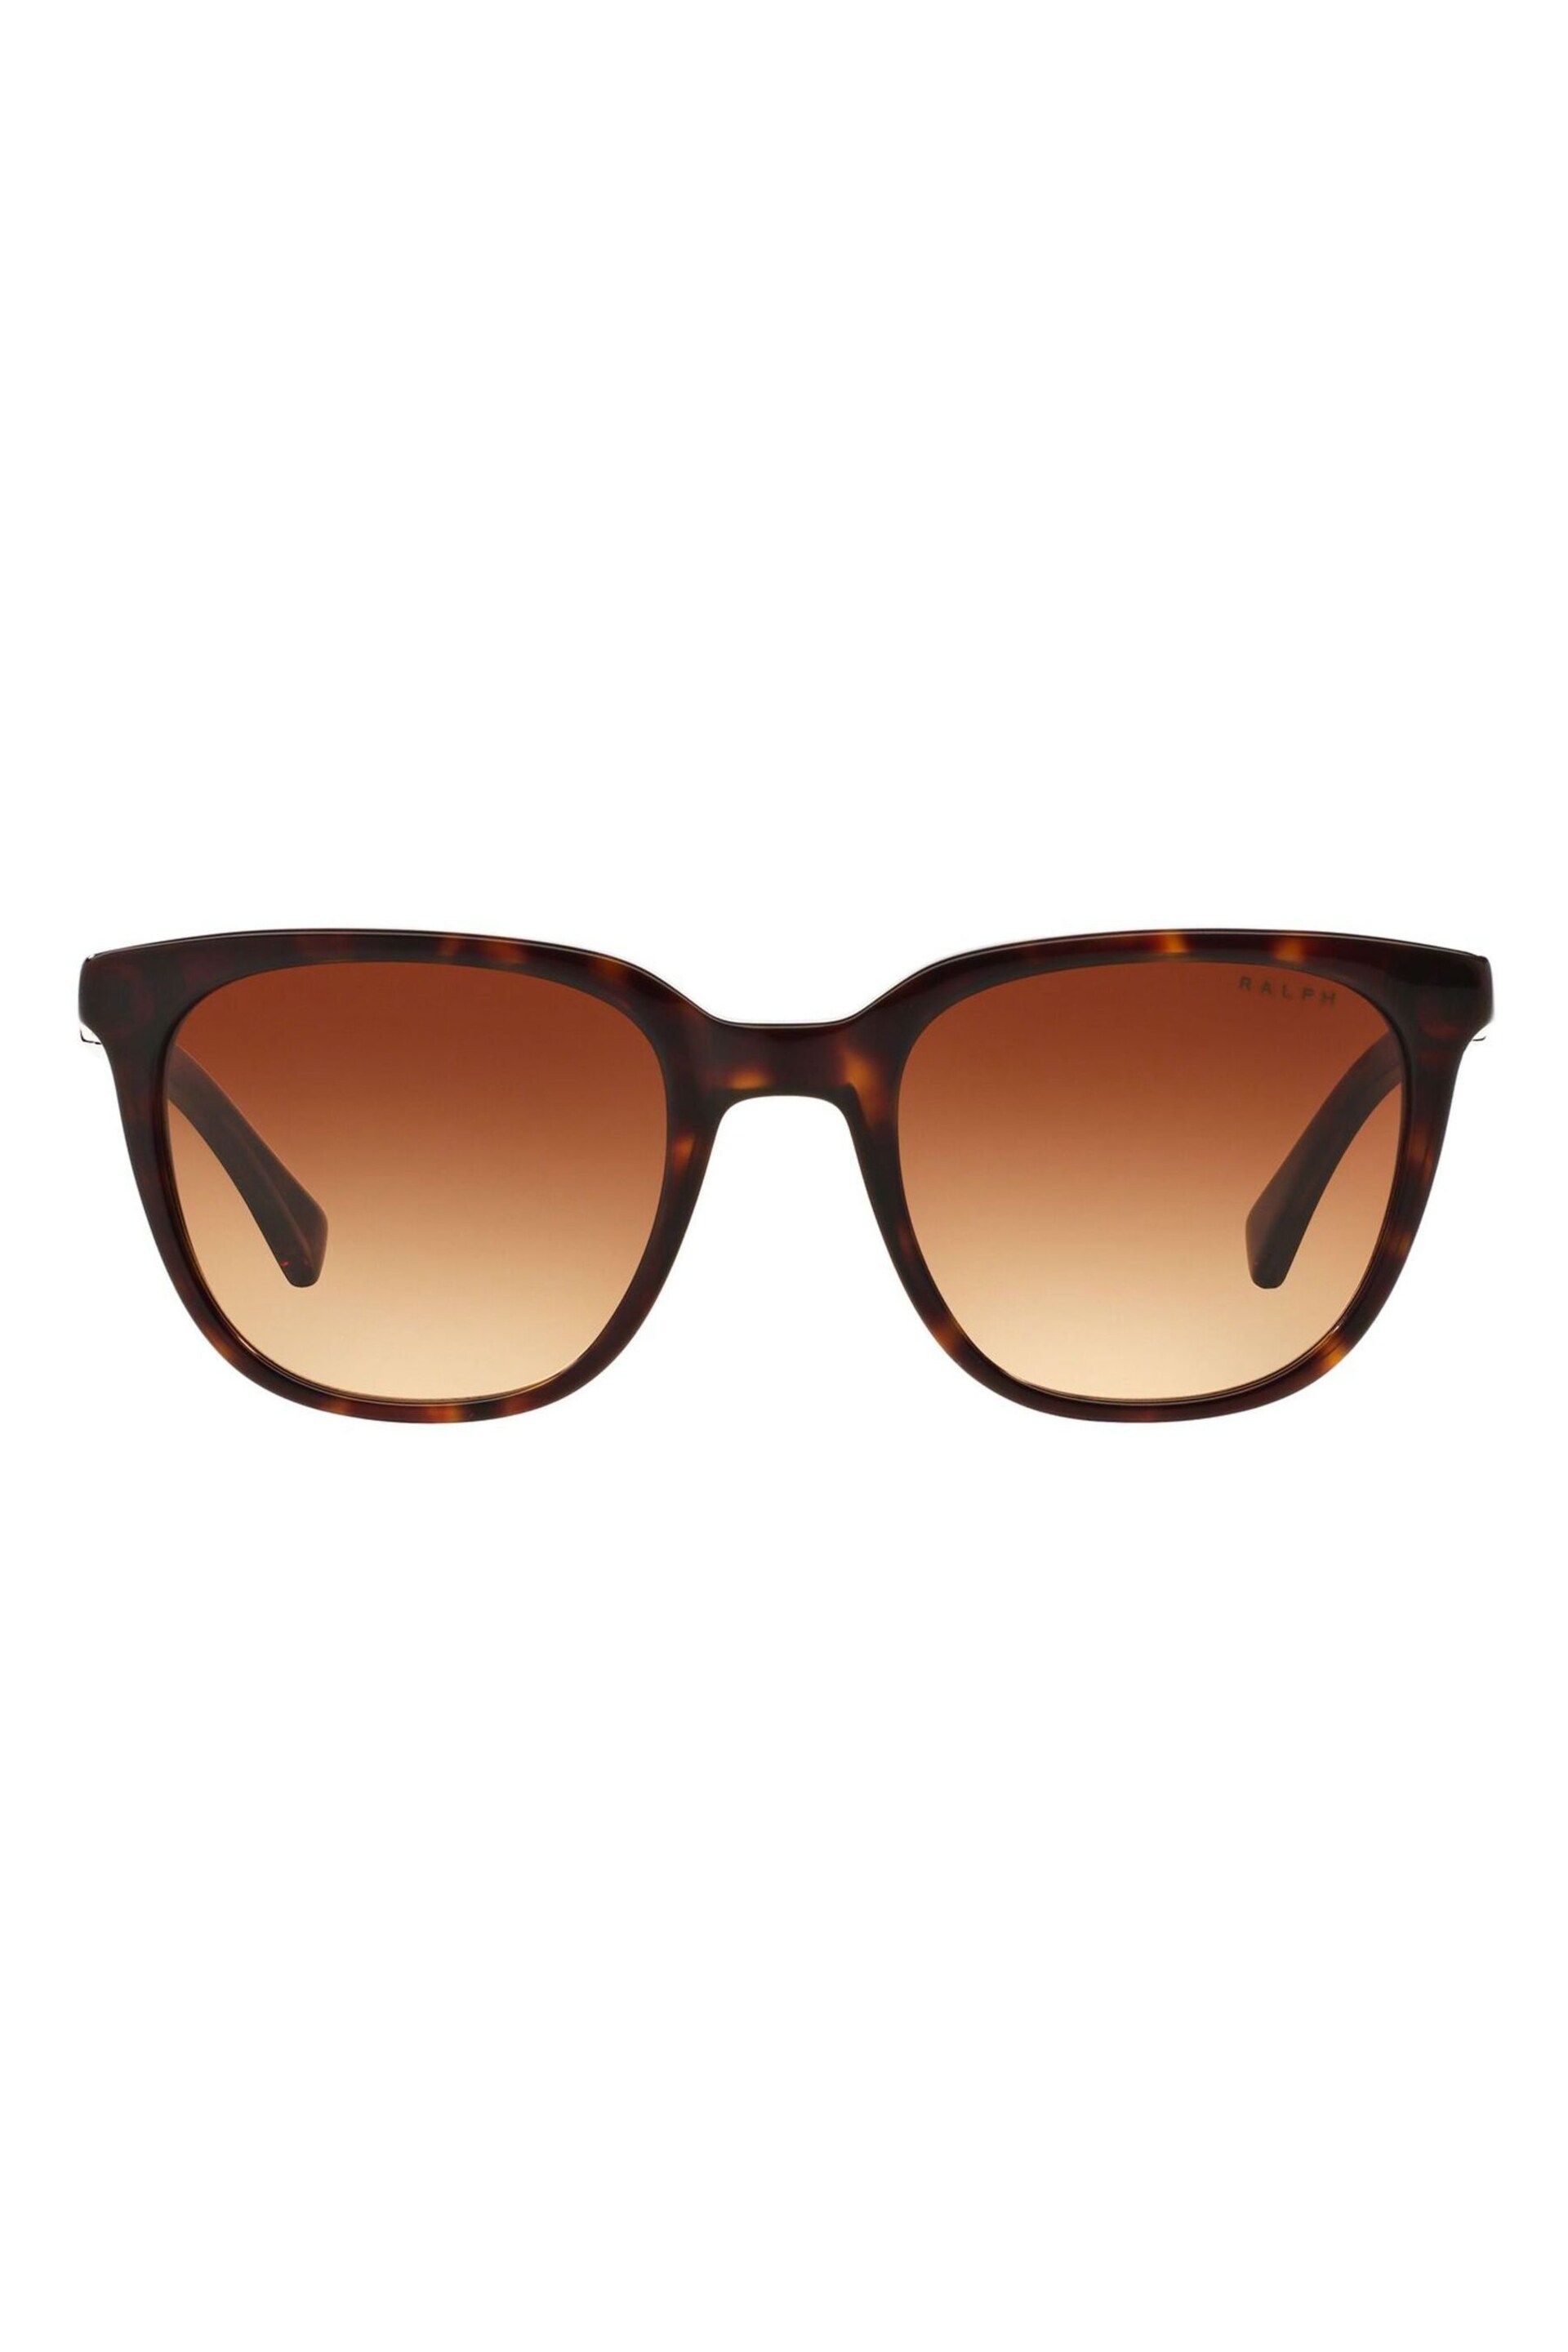 Ralph By Ralph Lauren Brown 0RA5206 Sunglasses - Image 2 of 12